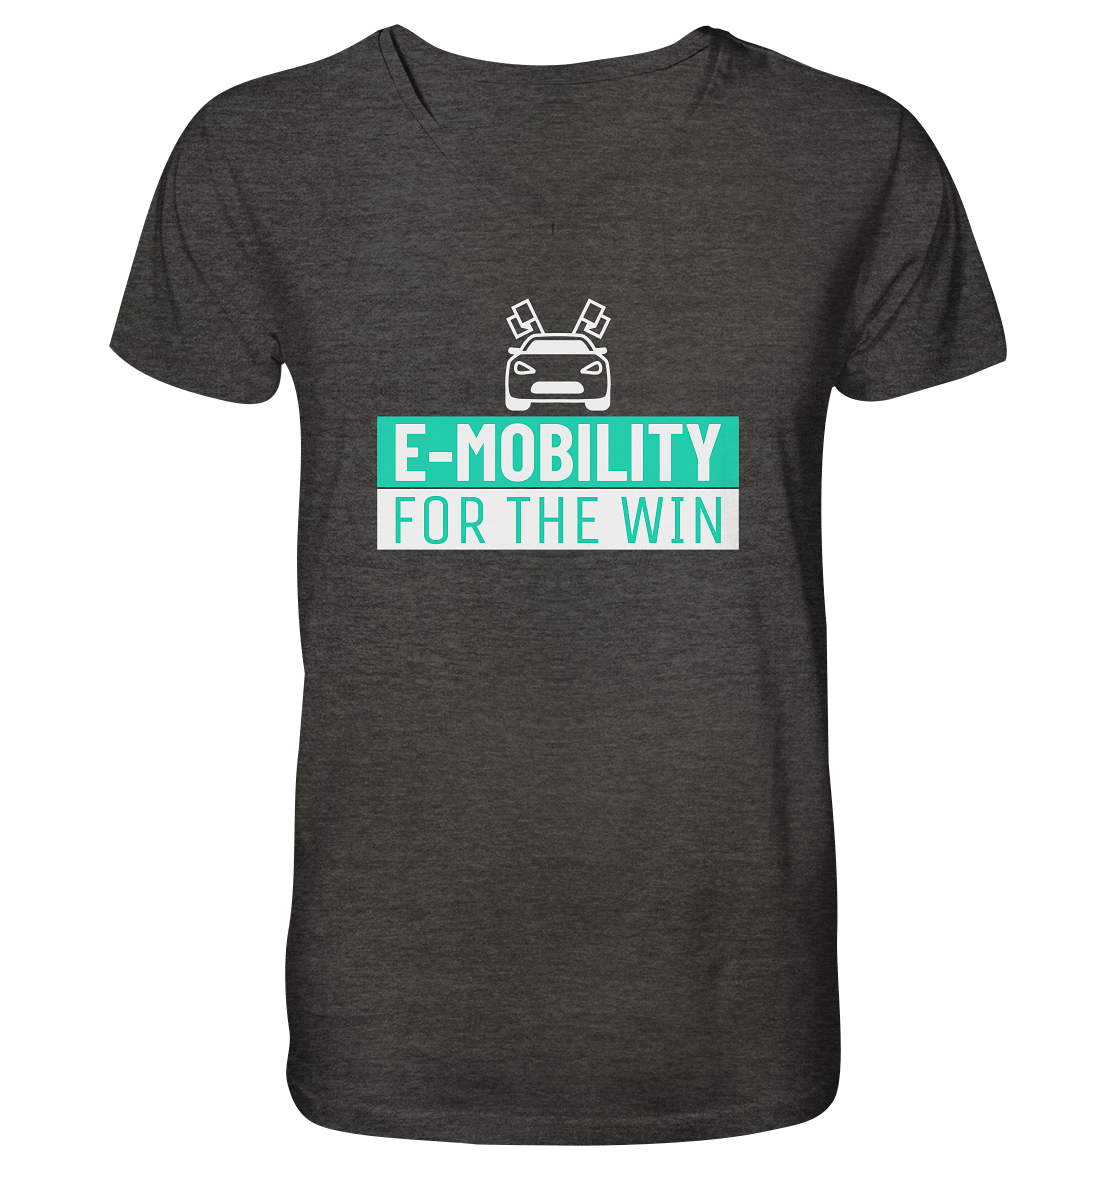 E-Mobility for the win ORGANIC - Mens Organic V-Neck Shirt